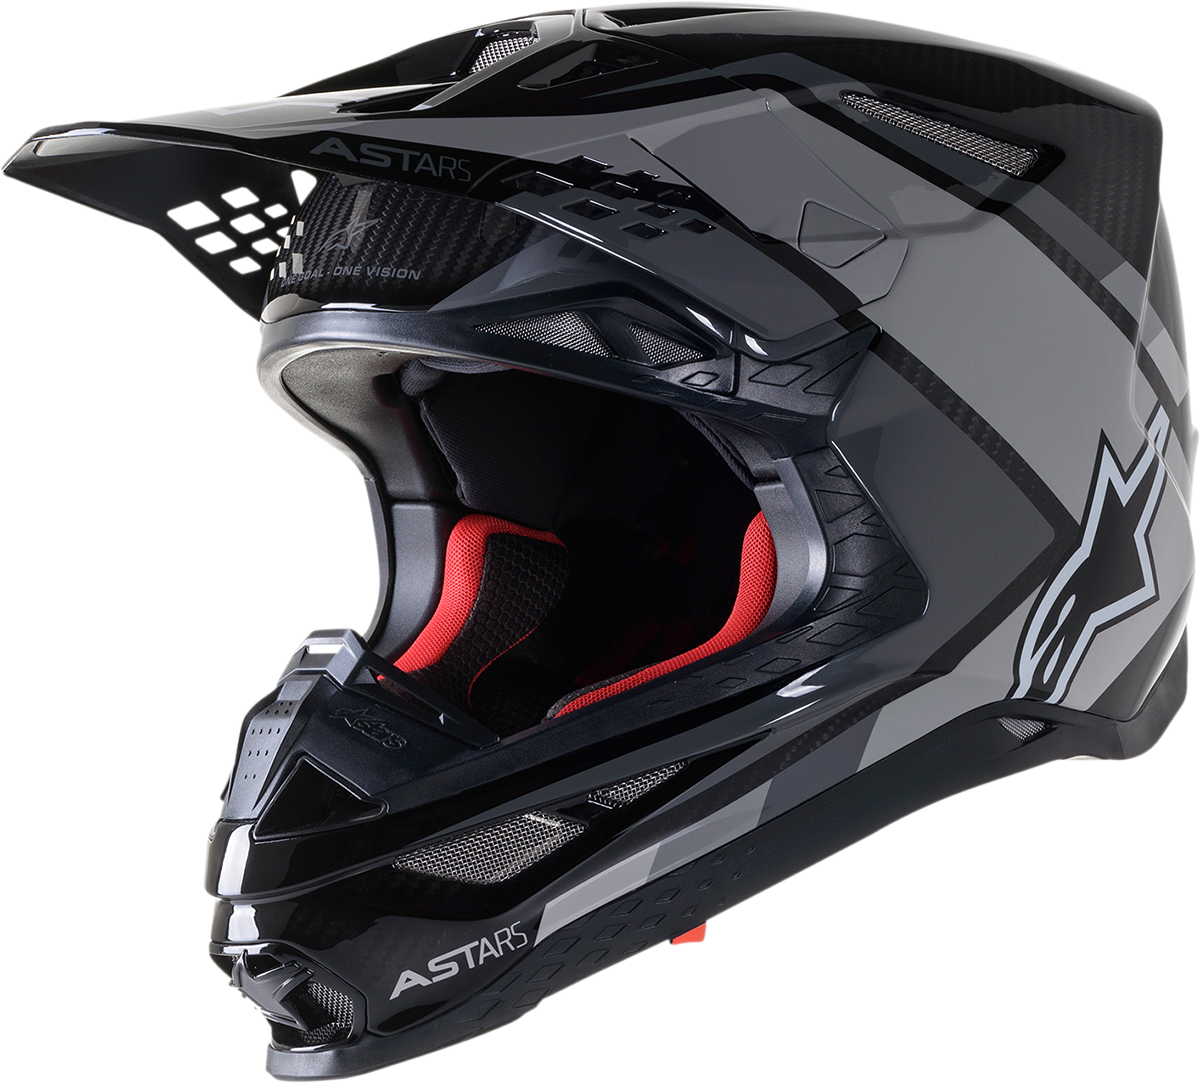 ALPINESTARS Supertech M10 Helmet - Meta 2 - MIPS® - Black/Gray/Gloss - Small 8300422-1195-SM